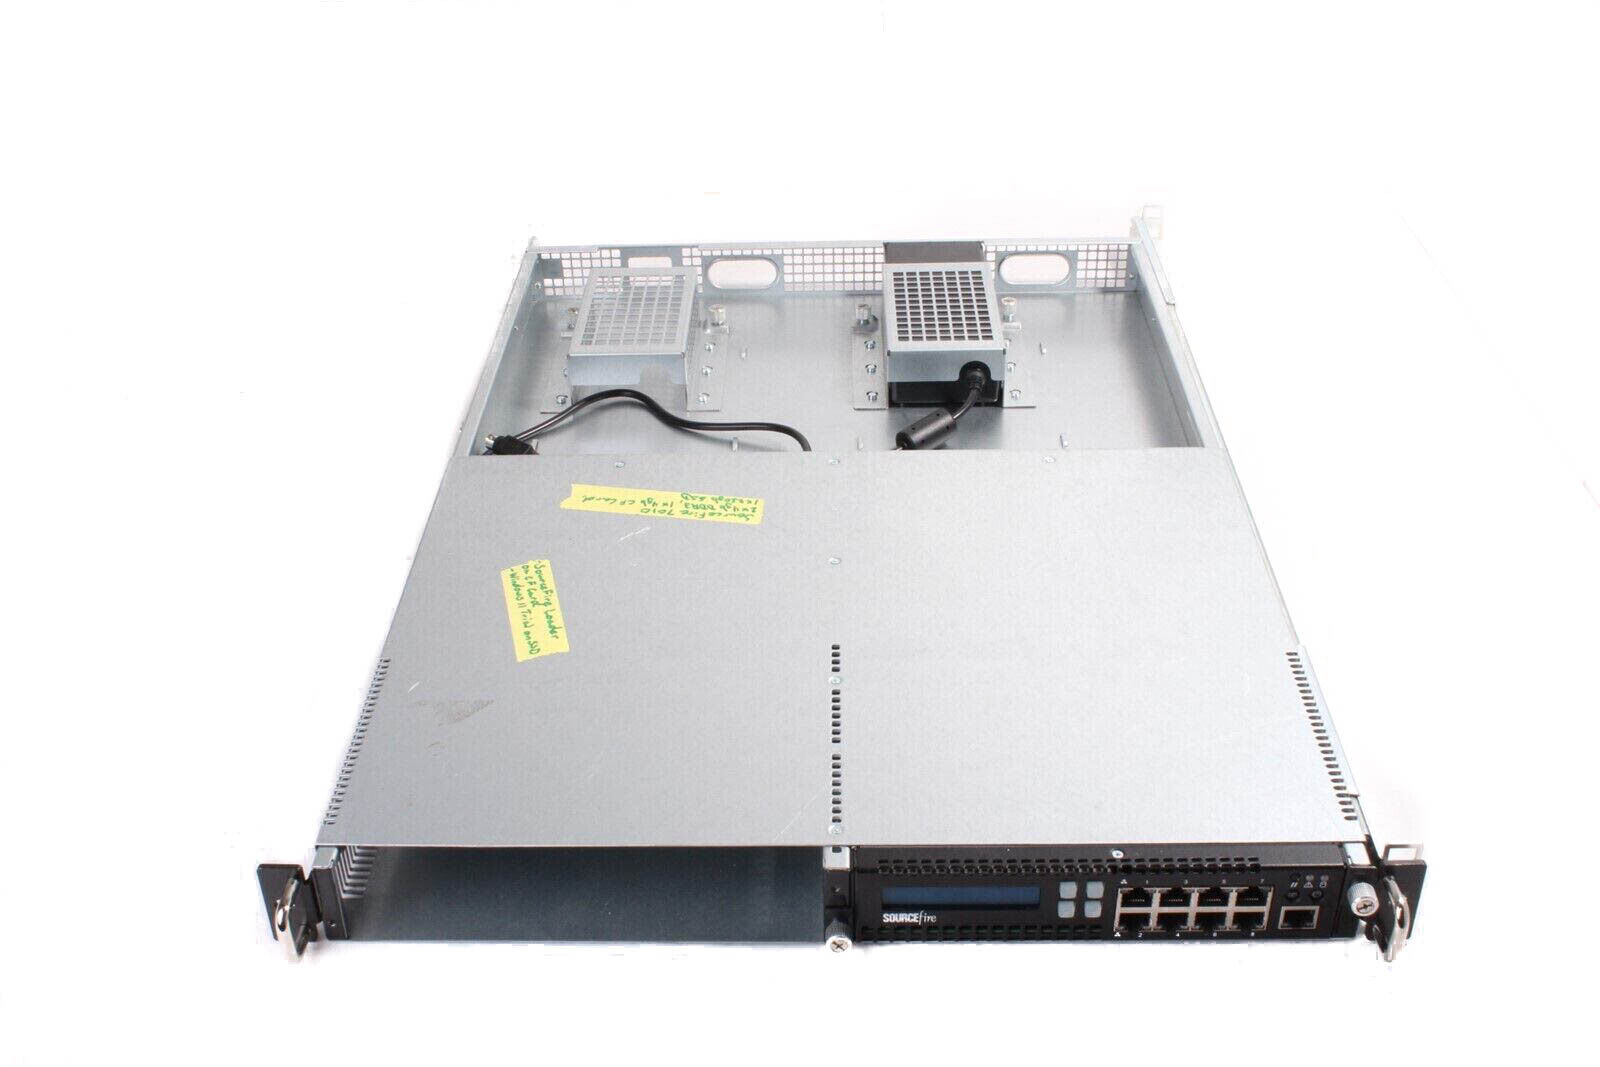 Cisco Sourcefire Firepower 7010 IPS 2X4GB RAM, 1X4GB CF Card, 1X250GB SSD